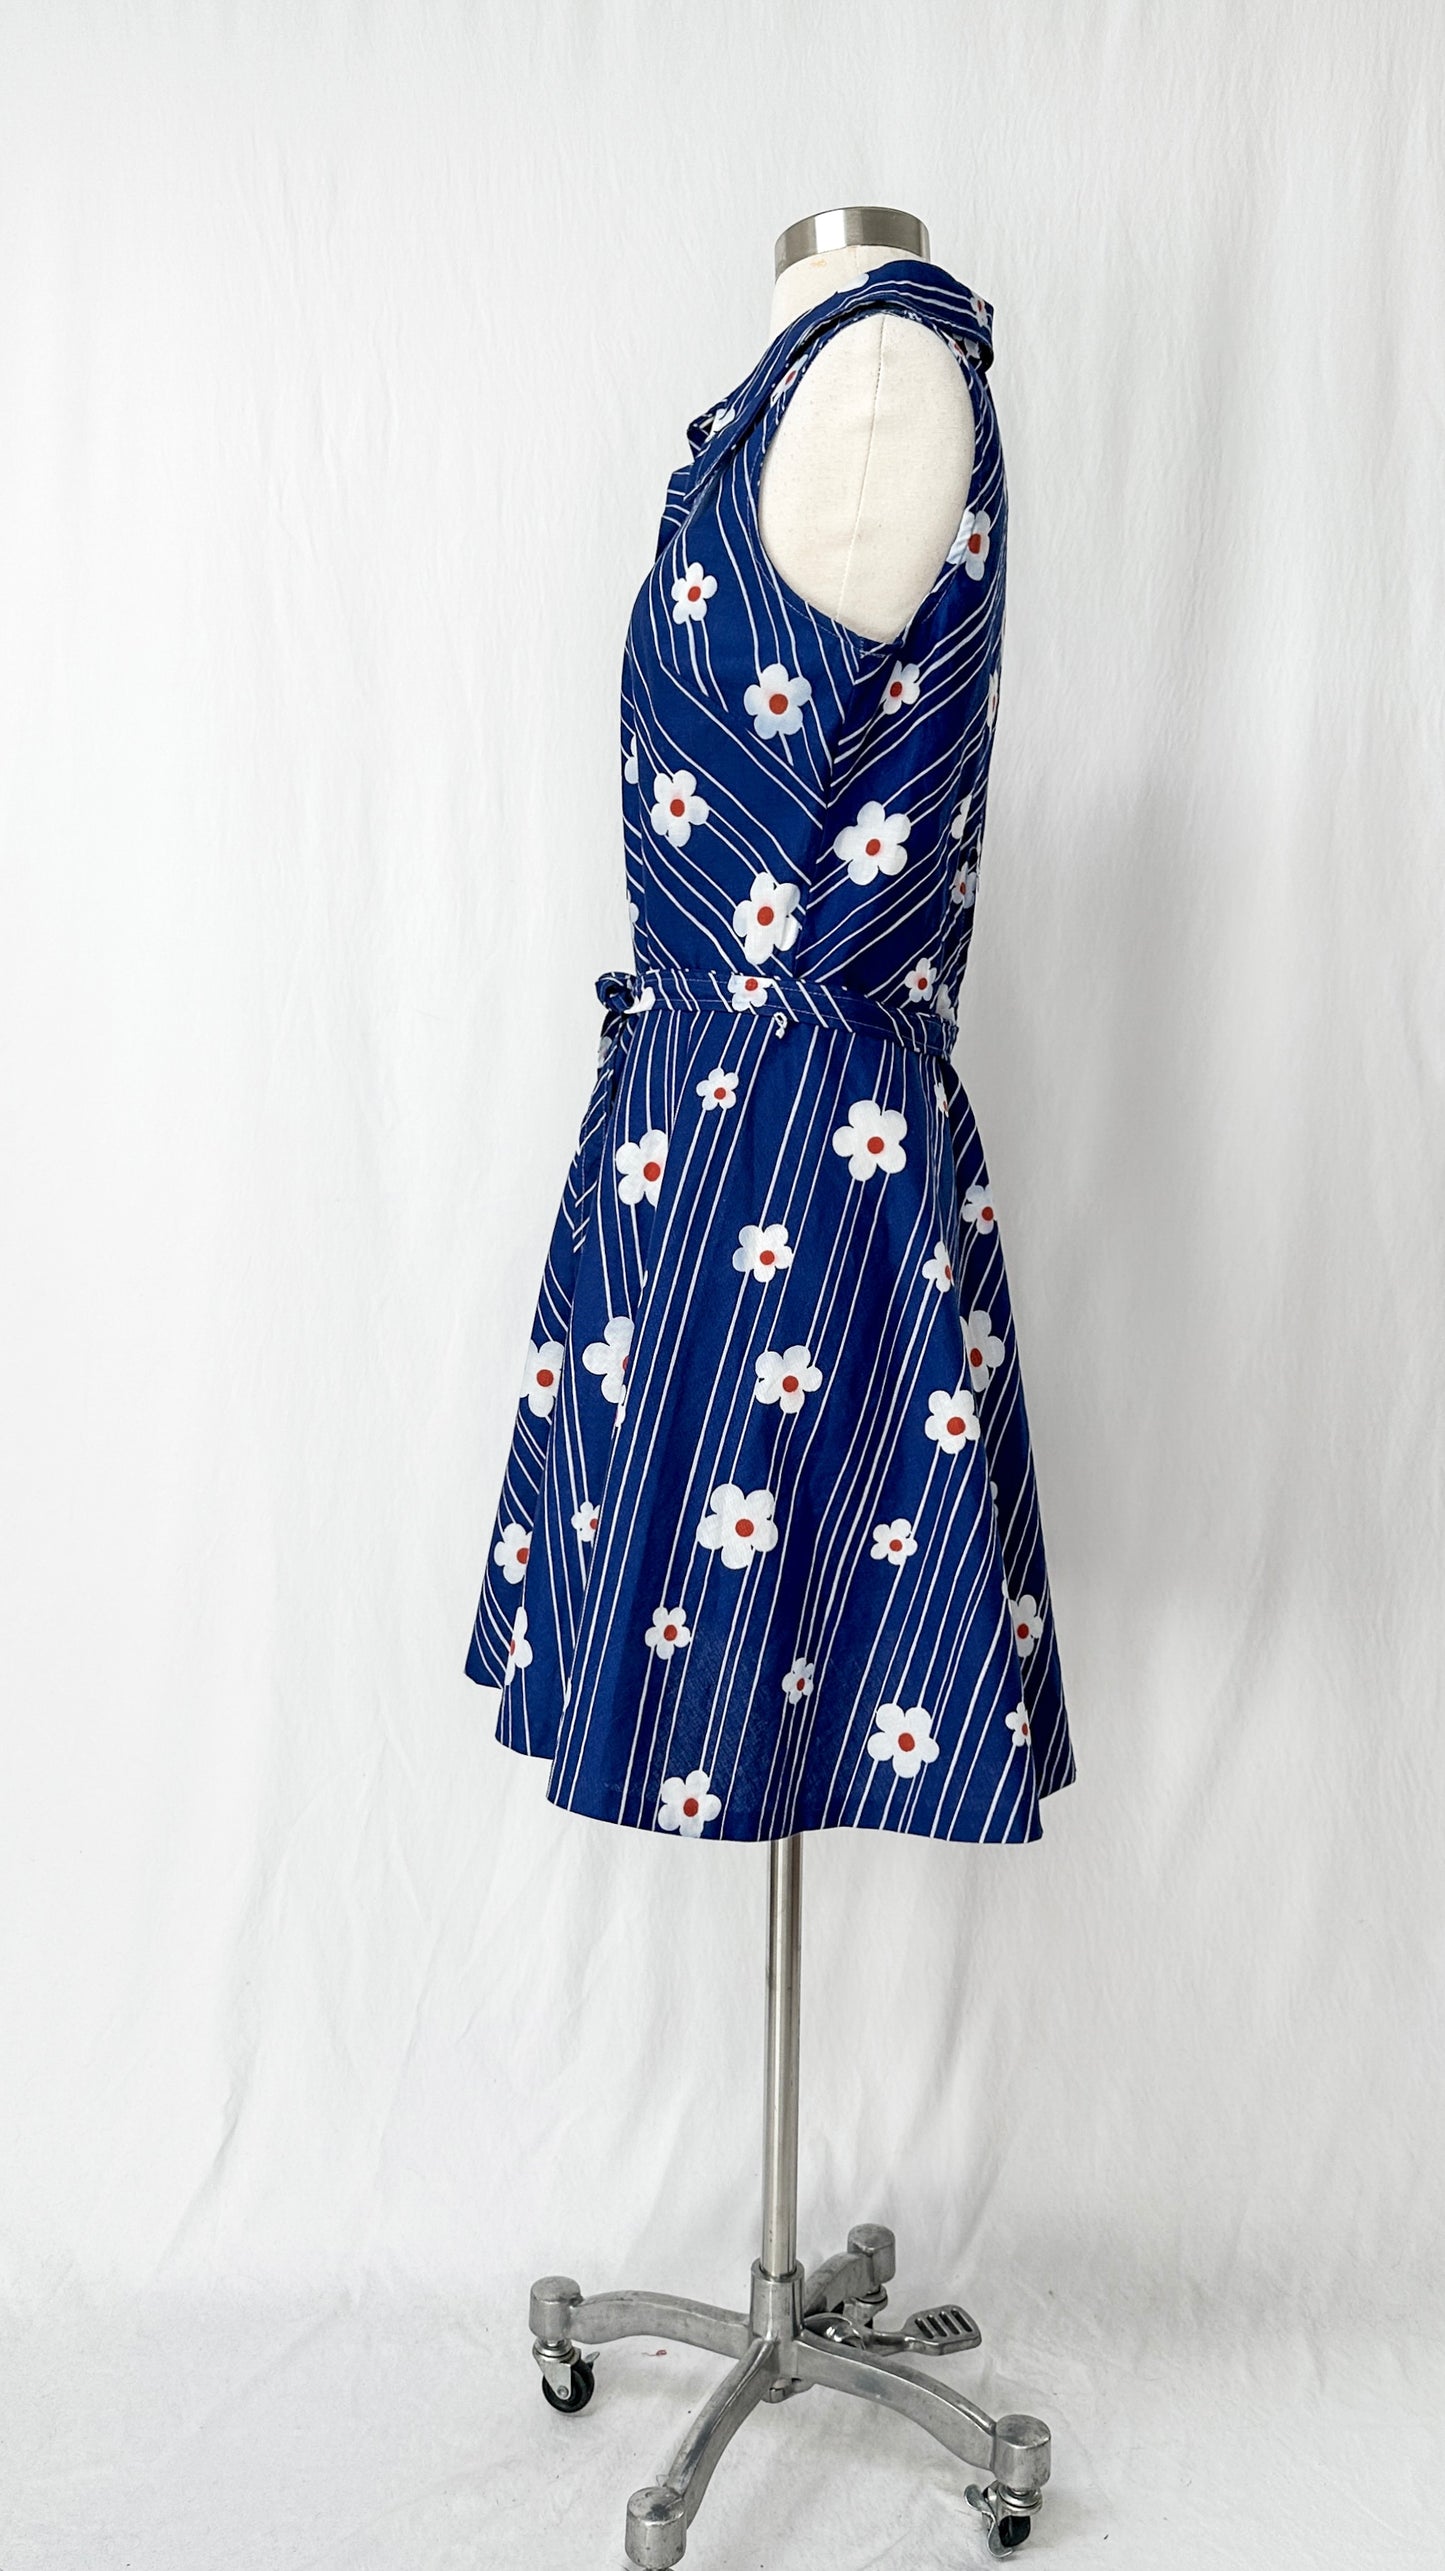 Vintage 60’s/70’s Blue Floral A-Line Dress (M or 8)